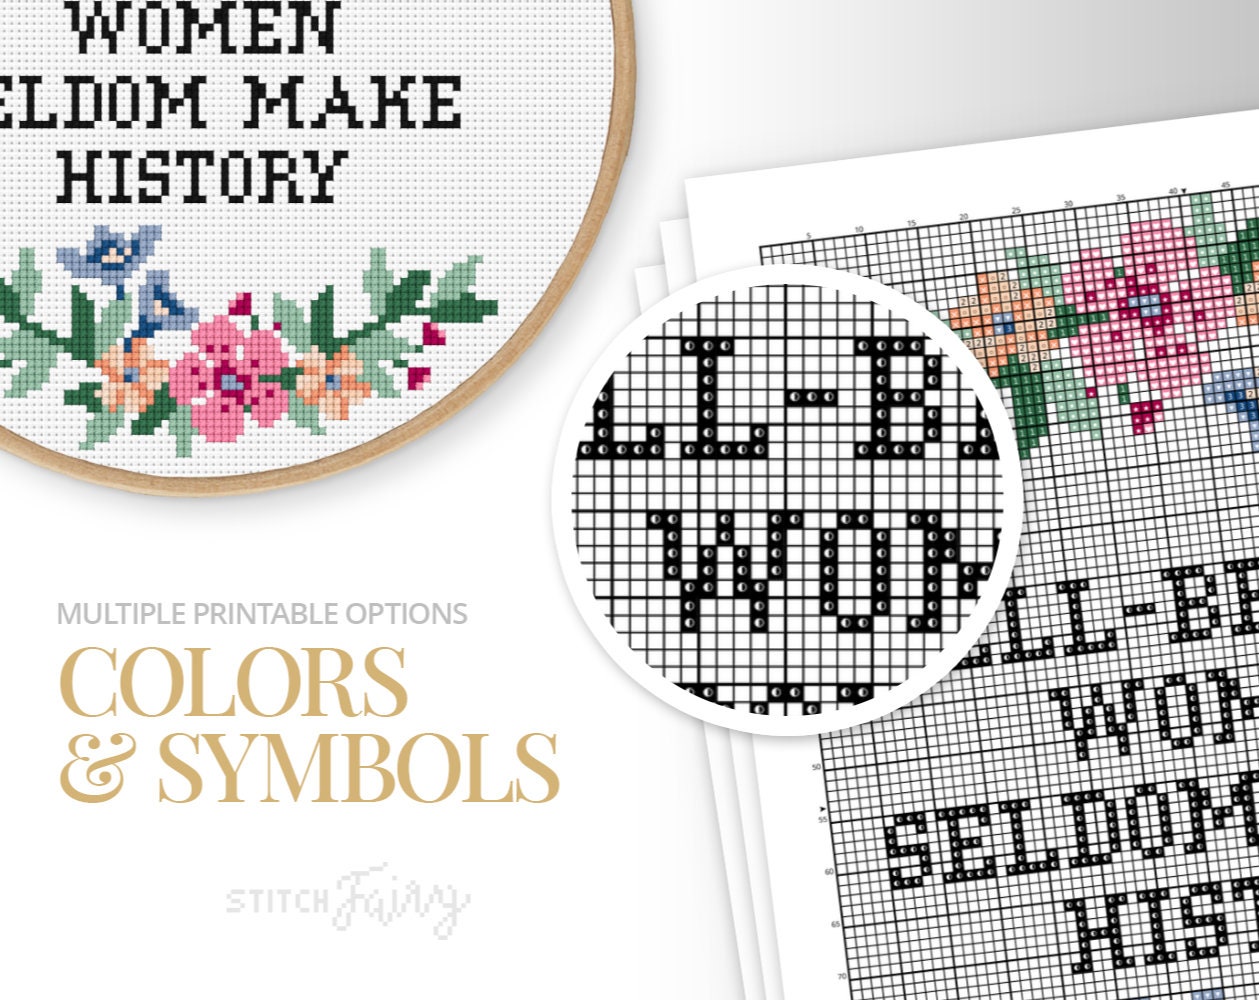 Well-behaved Women Seldom Make History Cross Stitch Beginner -   Cross  stitch beginner, Cross stitch kits, Funny cross stitch patterns